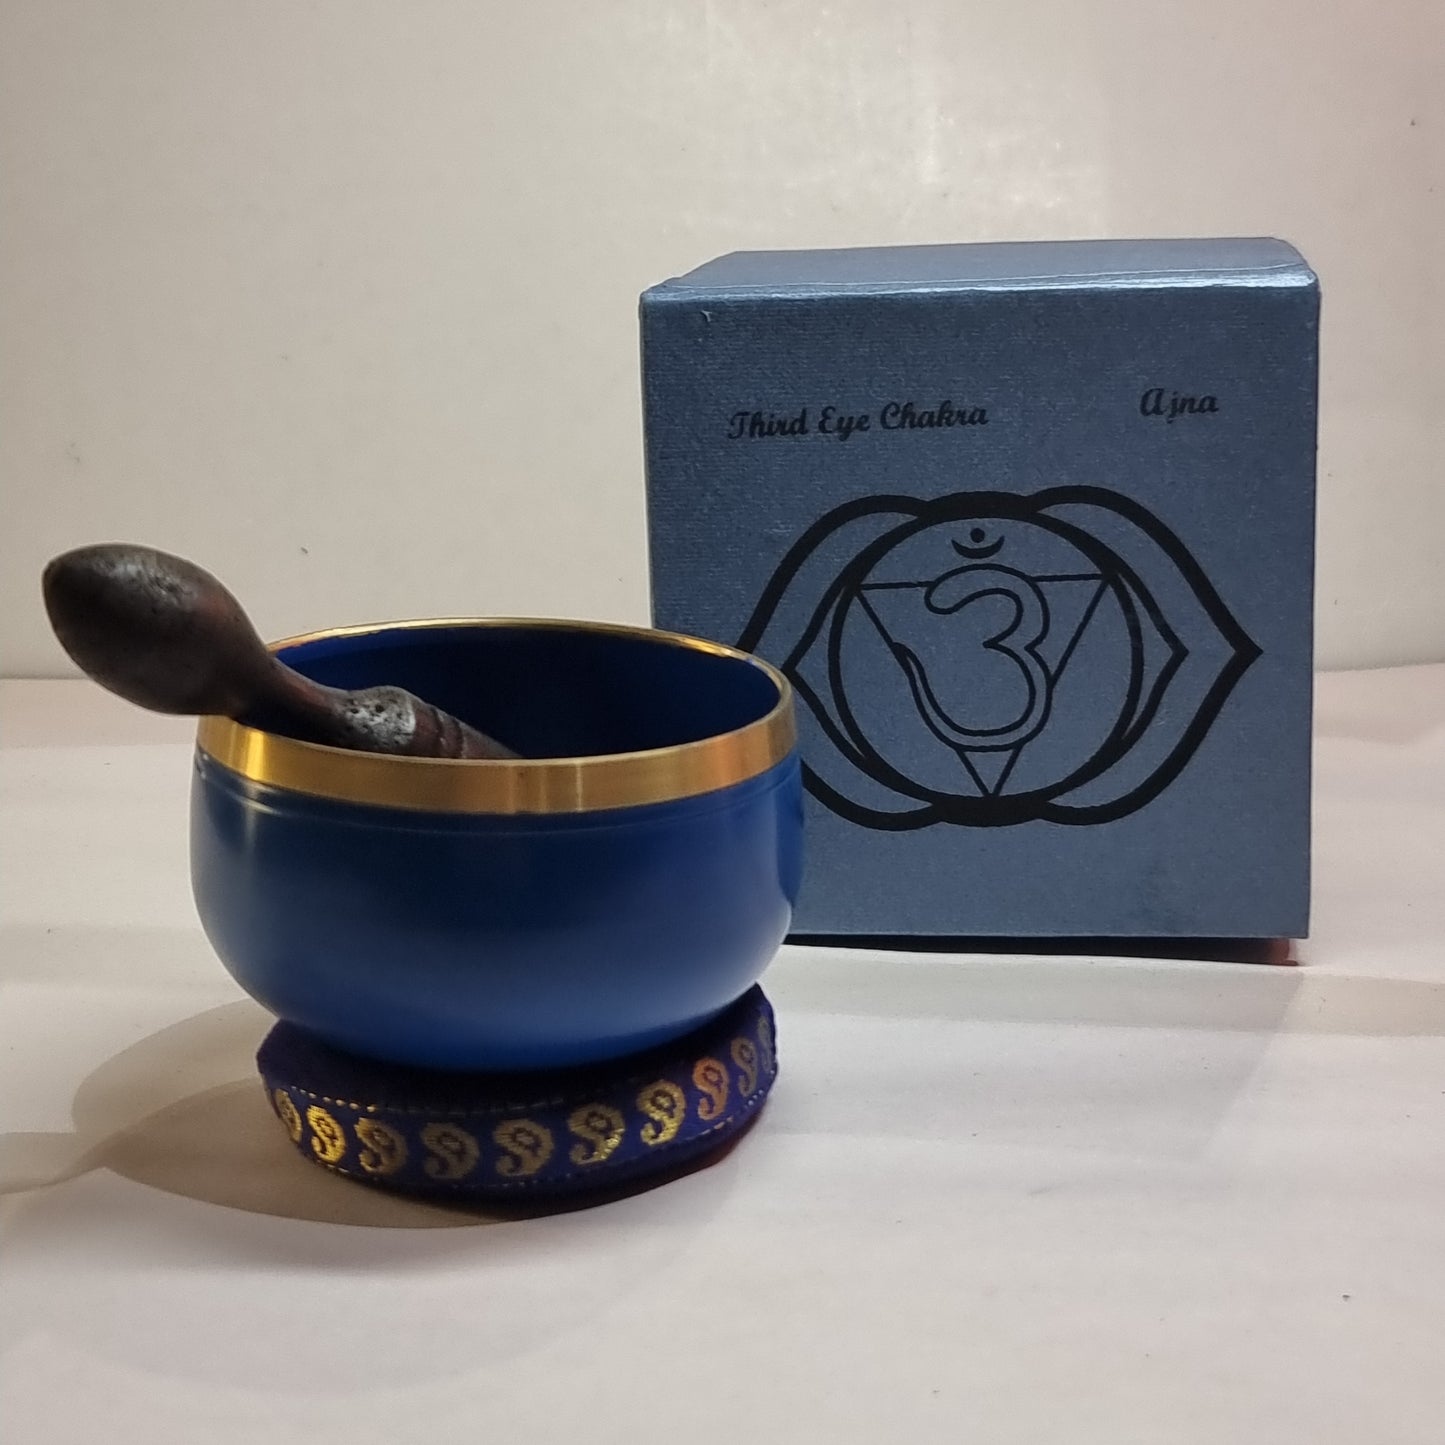 Singing bowl gift set - third eye chakra - Rivendell Shop